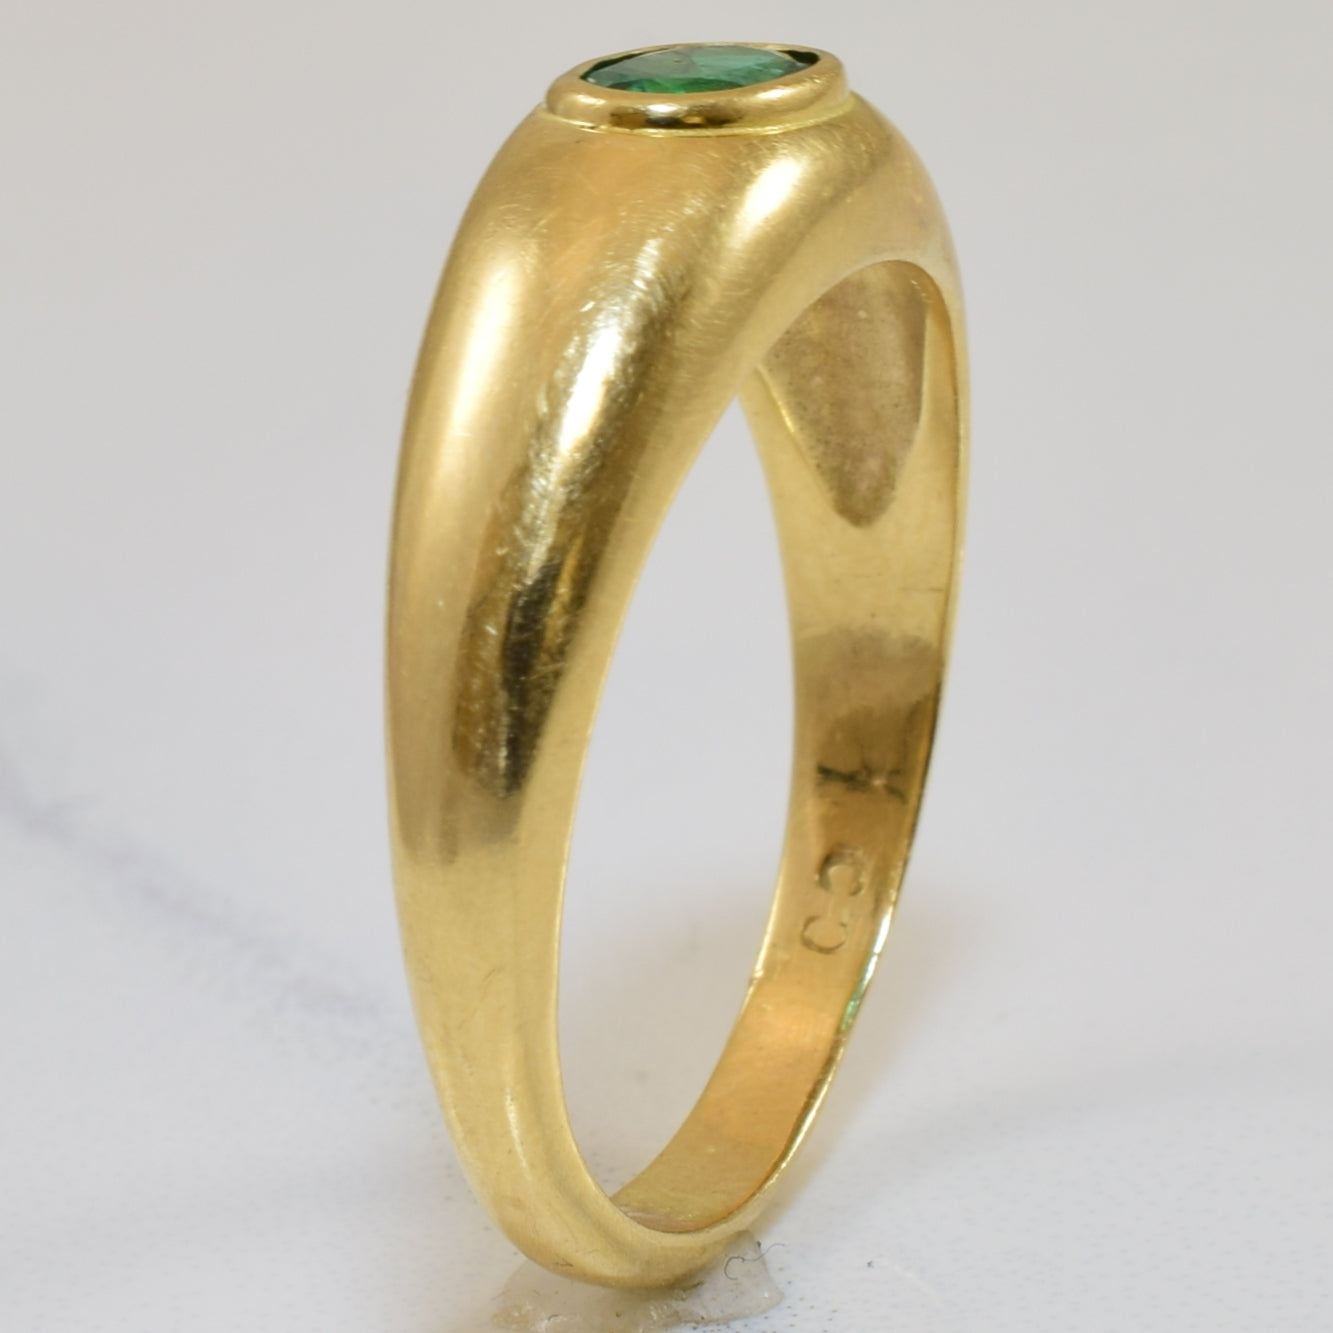 Tapered Bezel Set Emerald Ring | 0.43ct | SZ 9.75 |